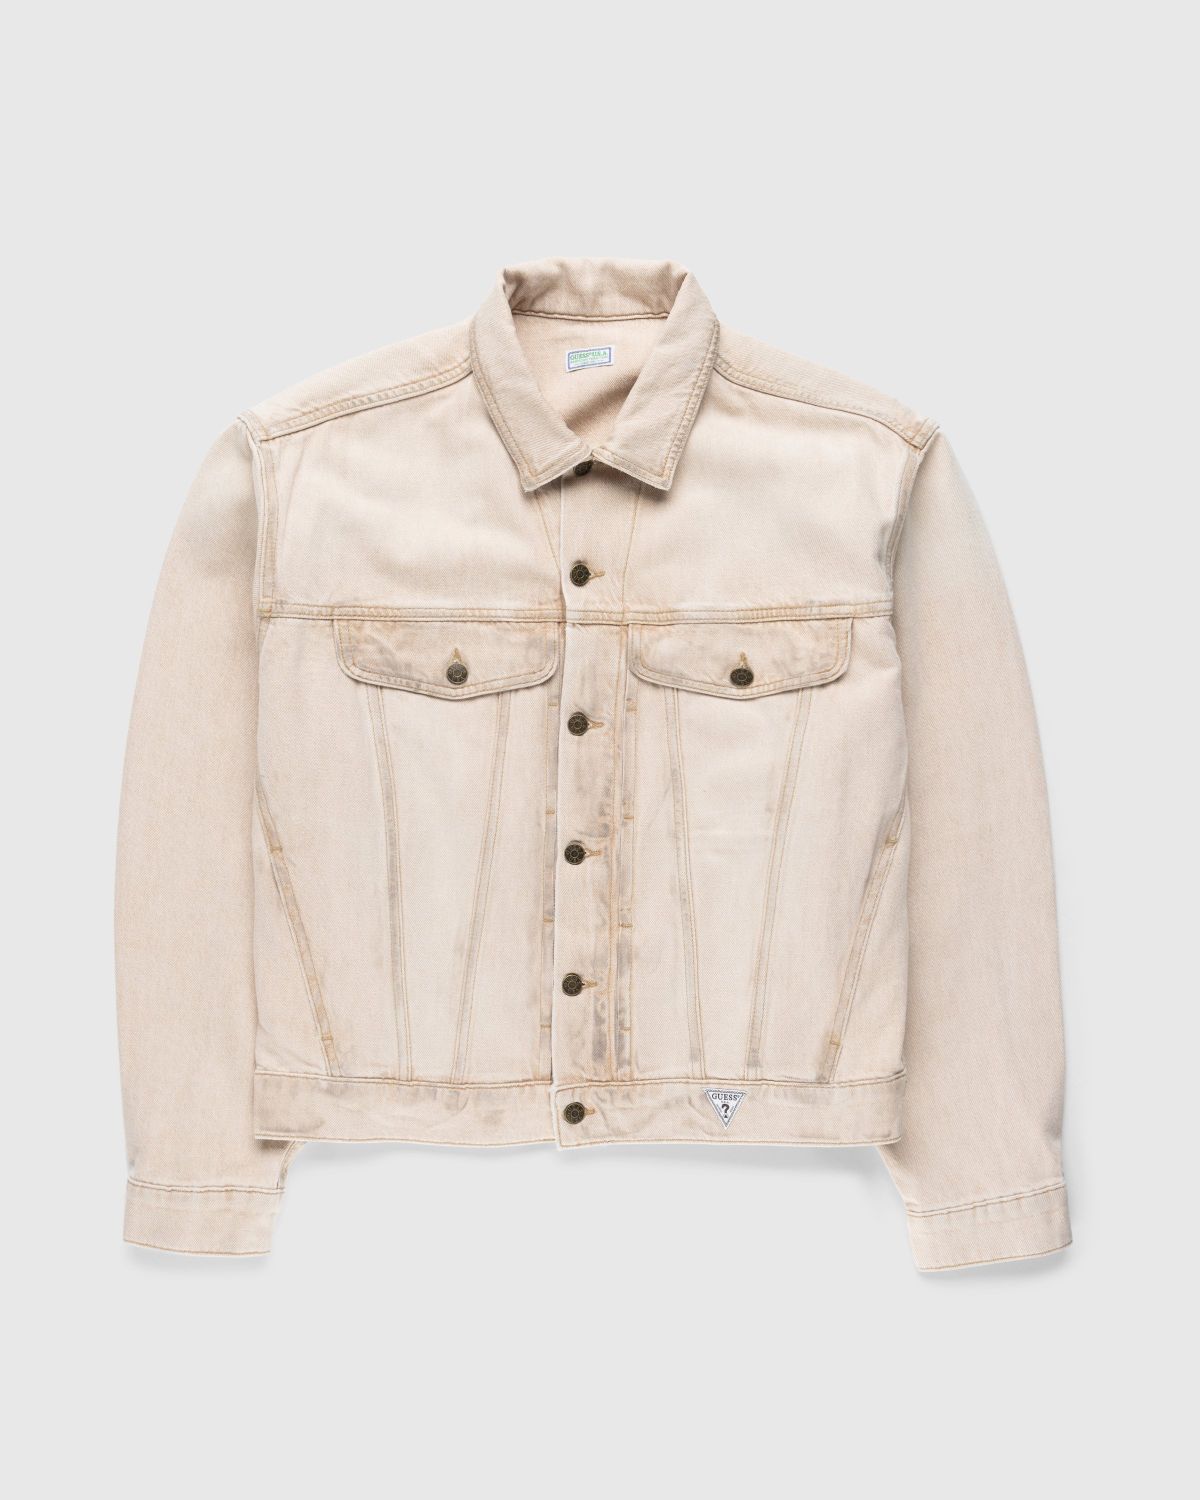 Guess USA – Vintage Denim Jacket Beige | Highsnobiety Shop